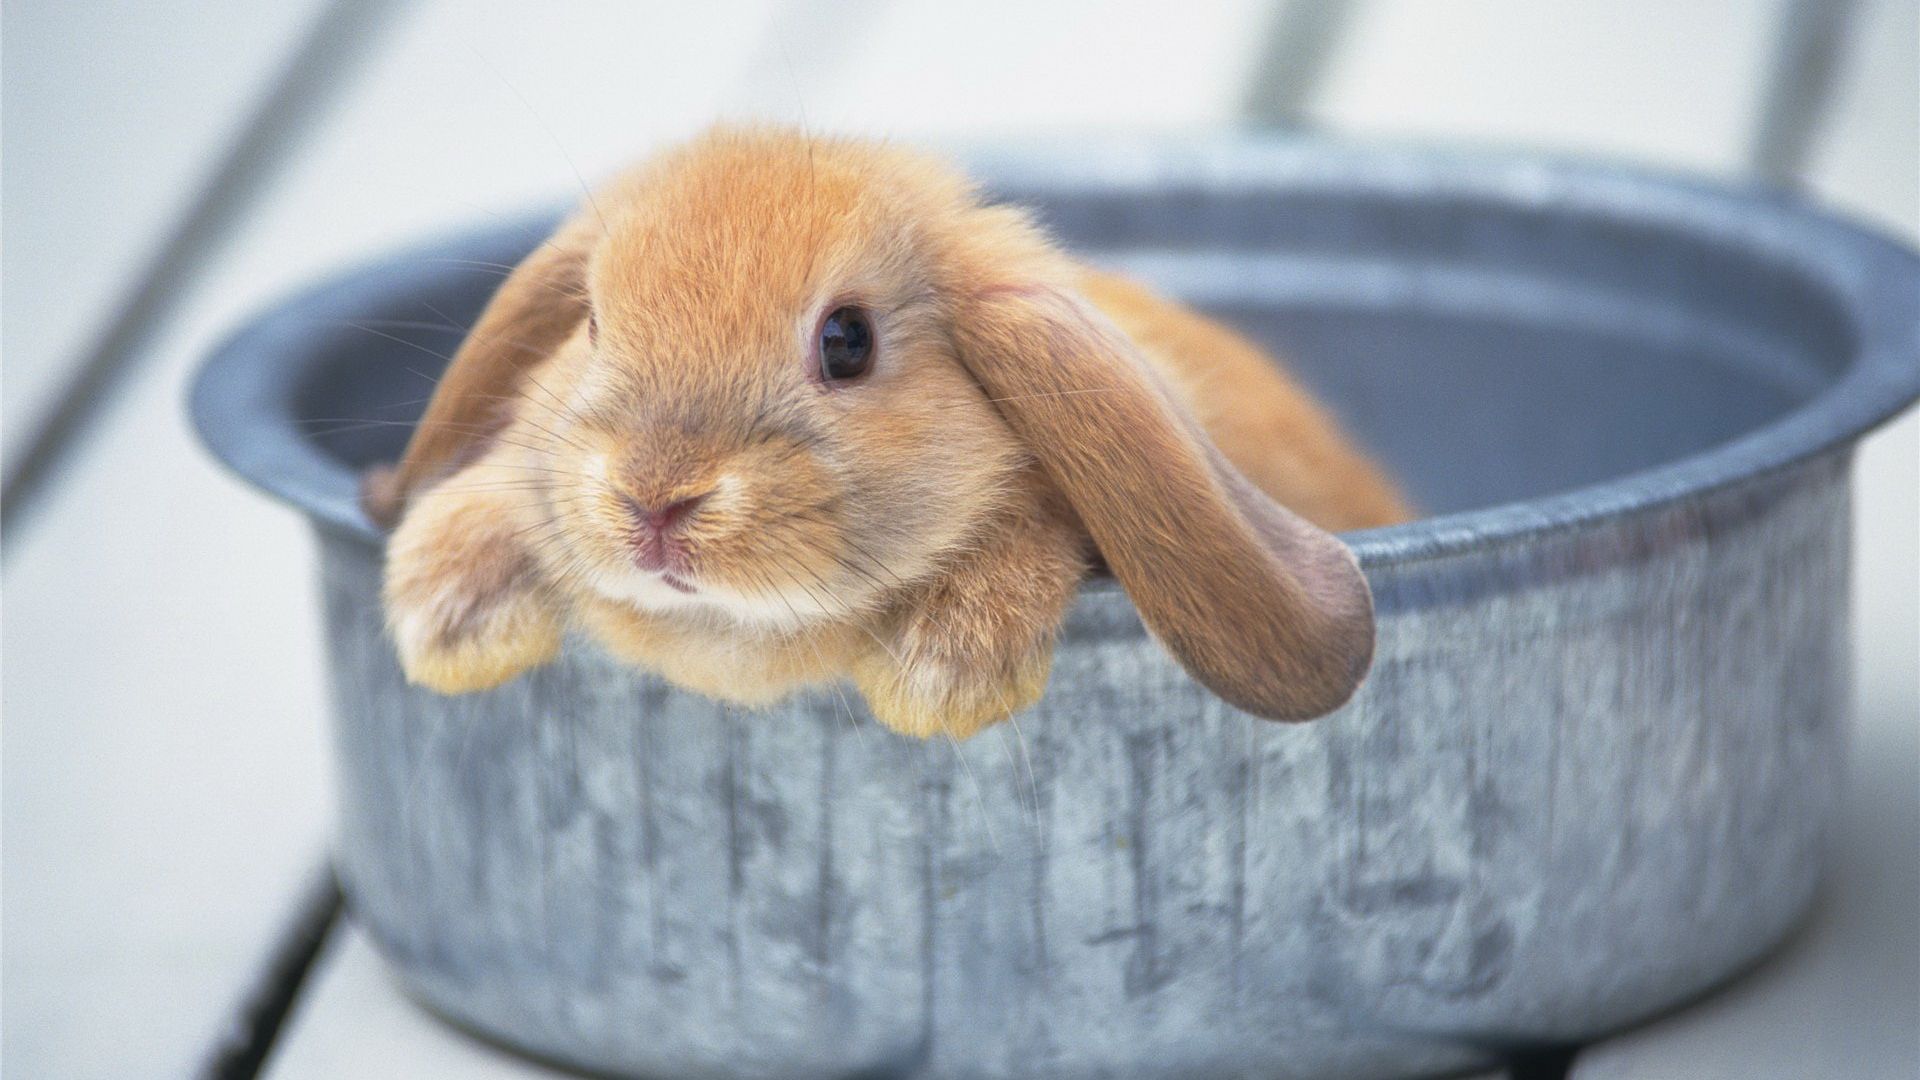 Wallpaper Cute Rabbit in tub, animal